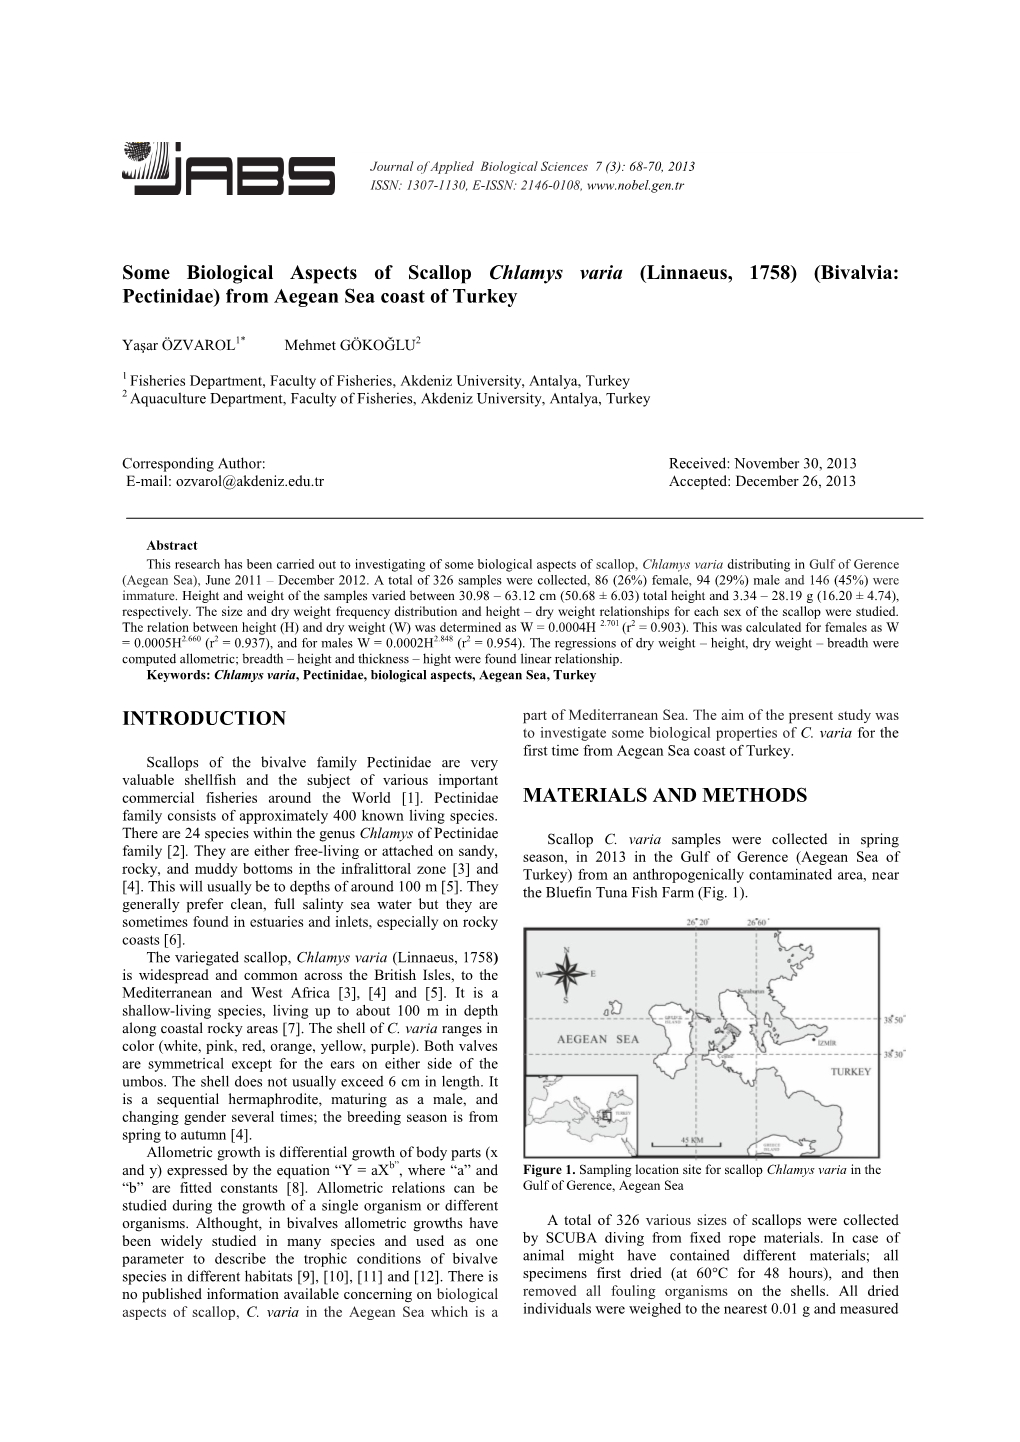 Some Biological Aspects of Scallop Chlamys Varia (Linnaeus, 1758) (Bivalvia: Pectinidae) from Aegean Sea Coast of Turkey